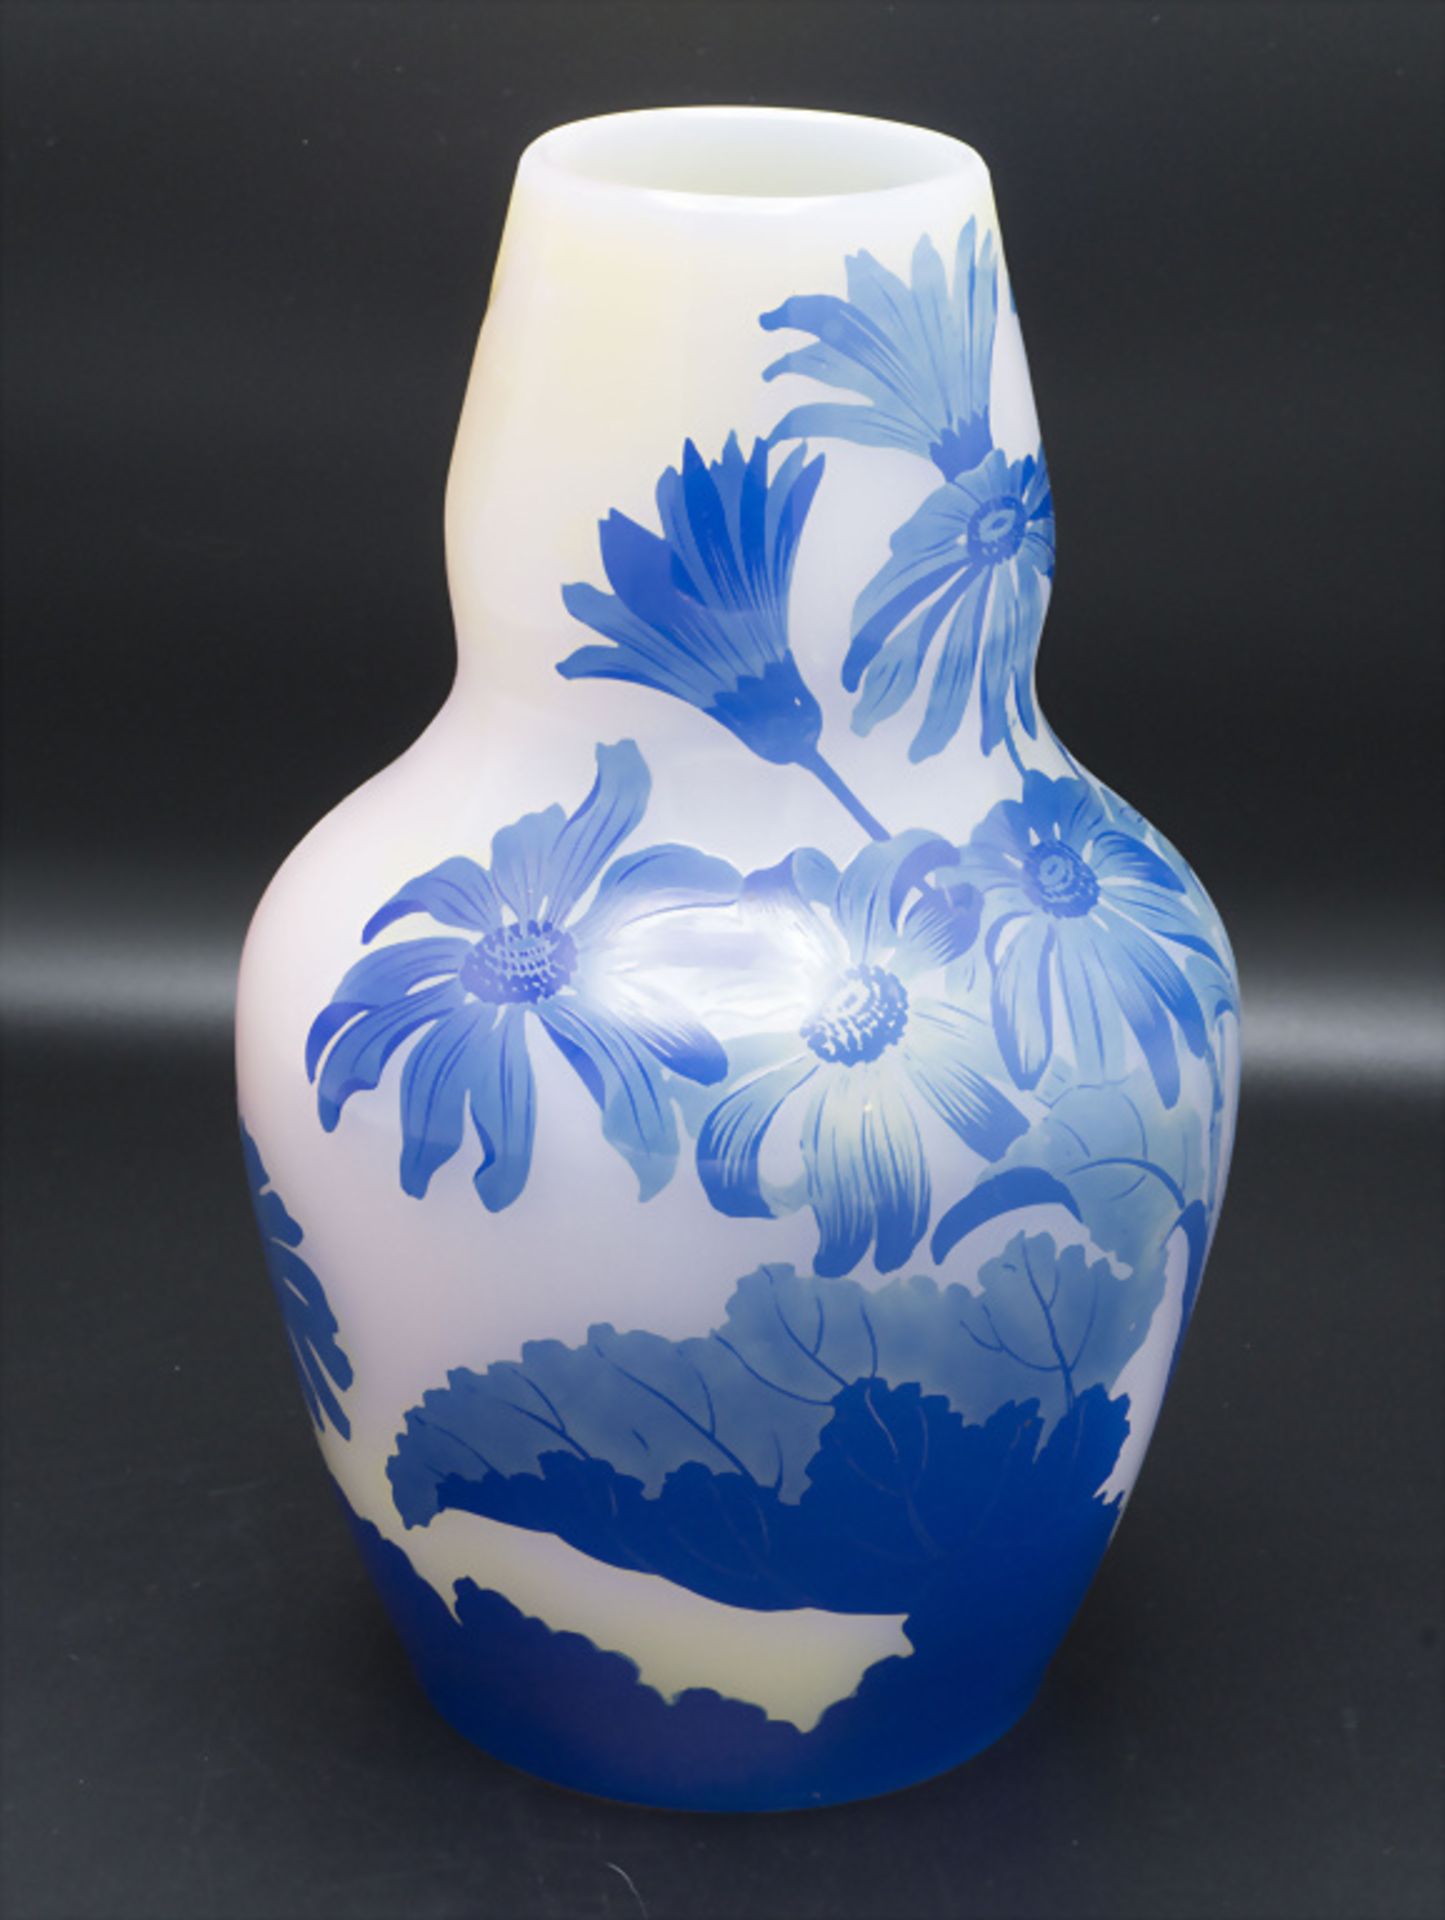 Jugendstil Kürbis-Vase mit Sonnenblumen / An Art Nouveau cameo glass vase with sunflowers, ... - Image 4 of 7